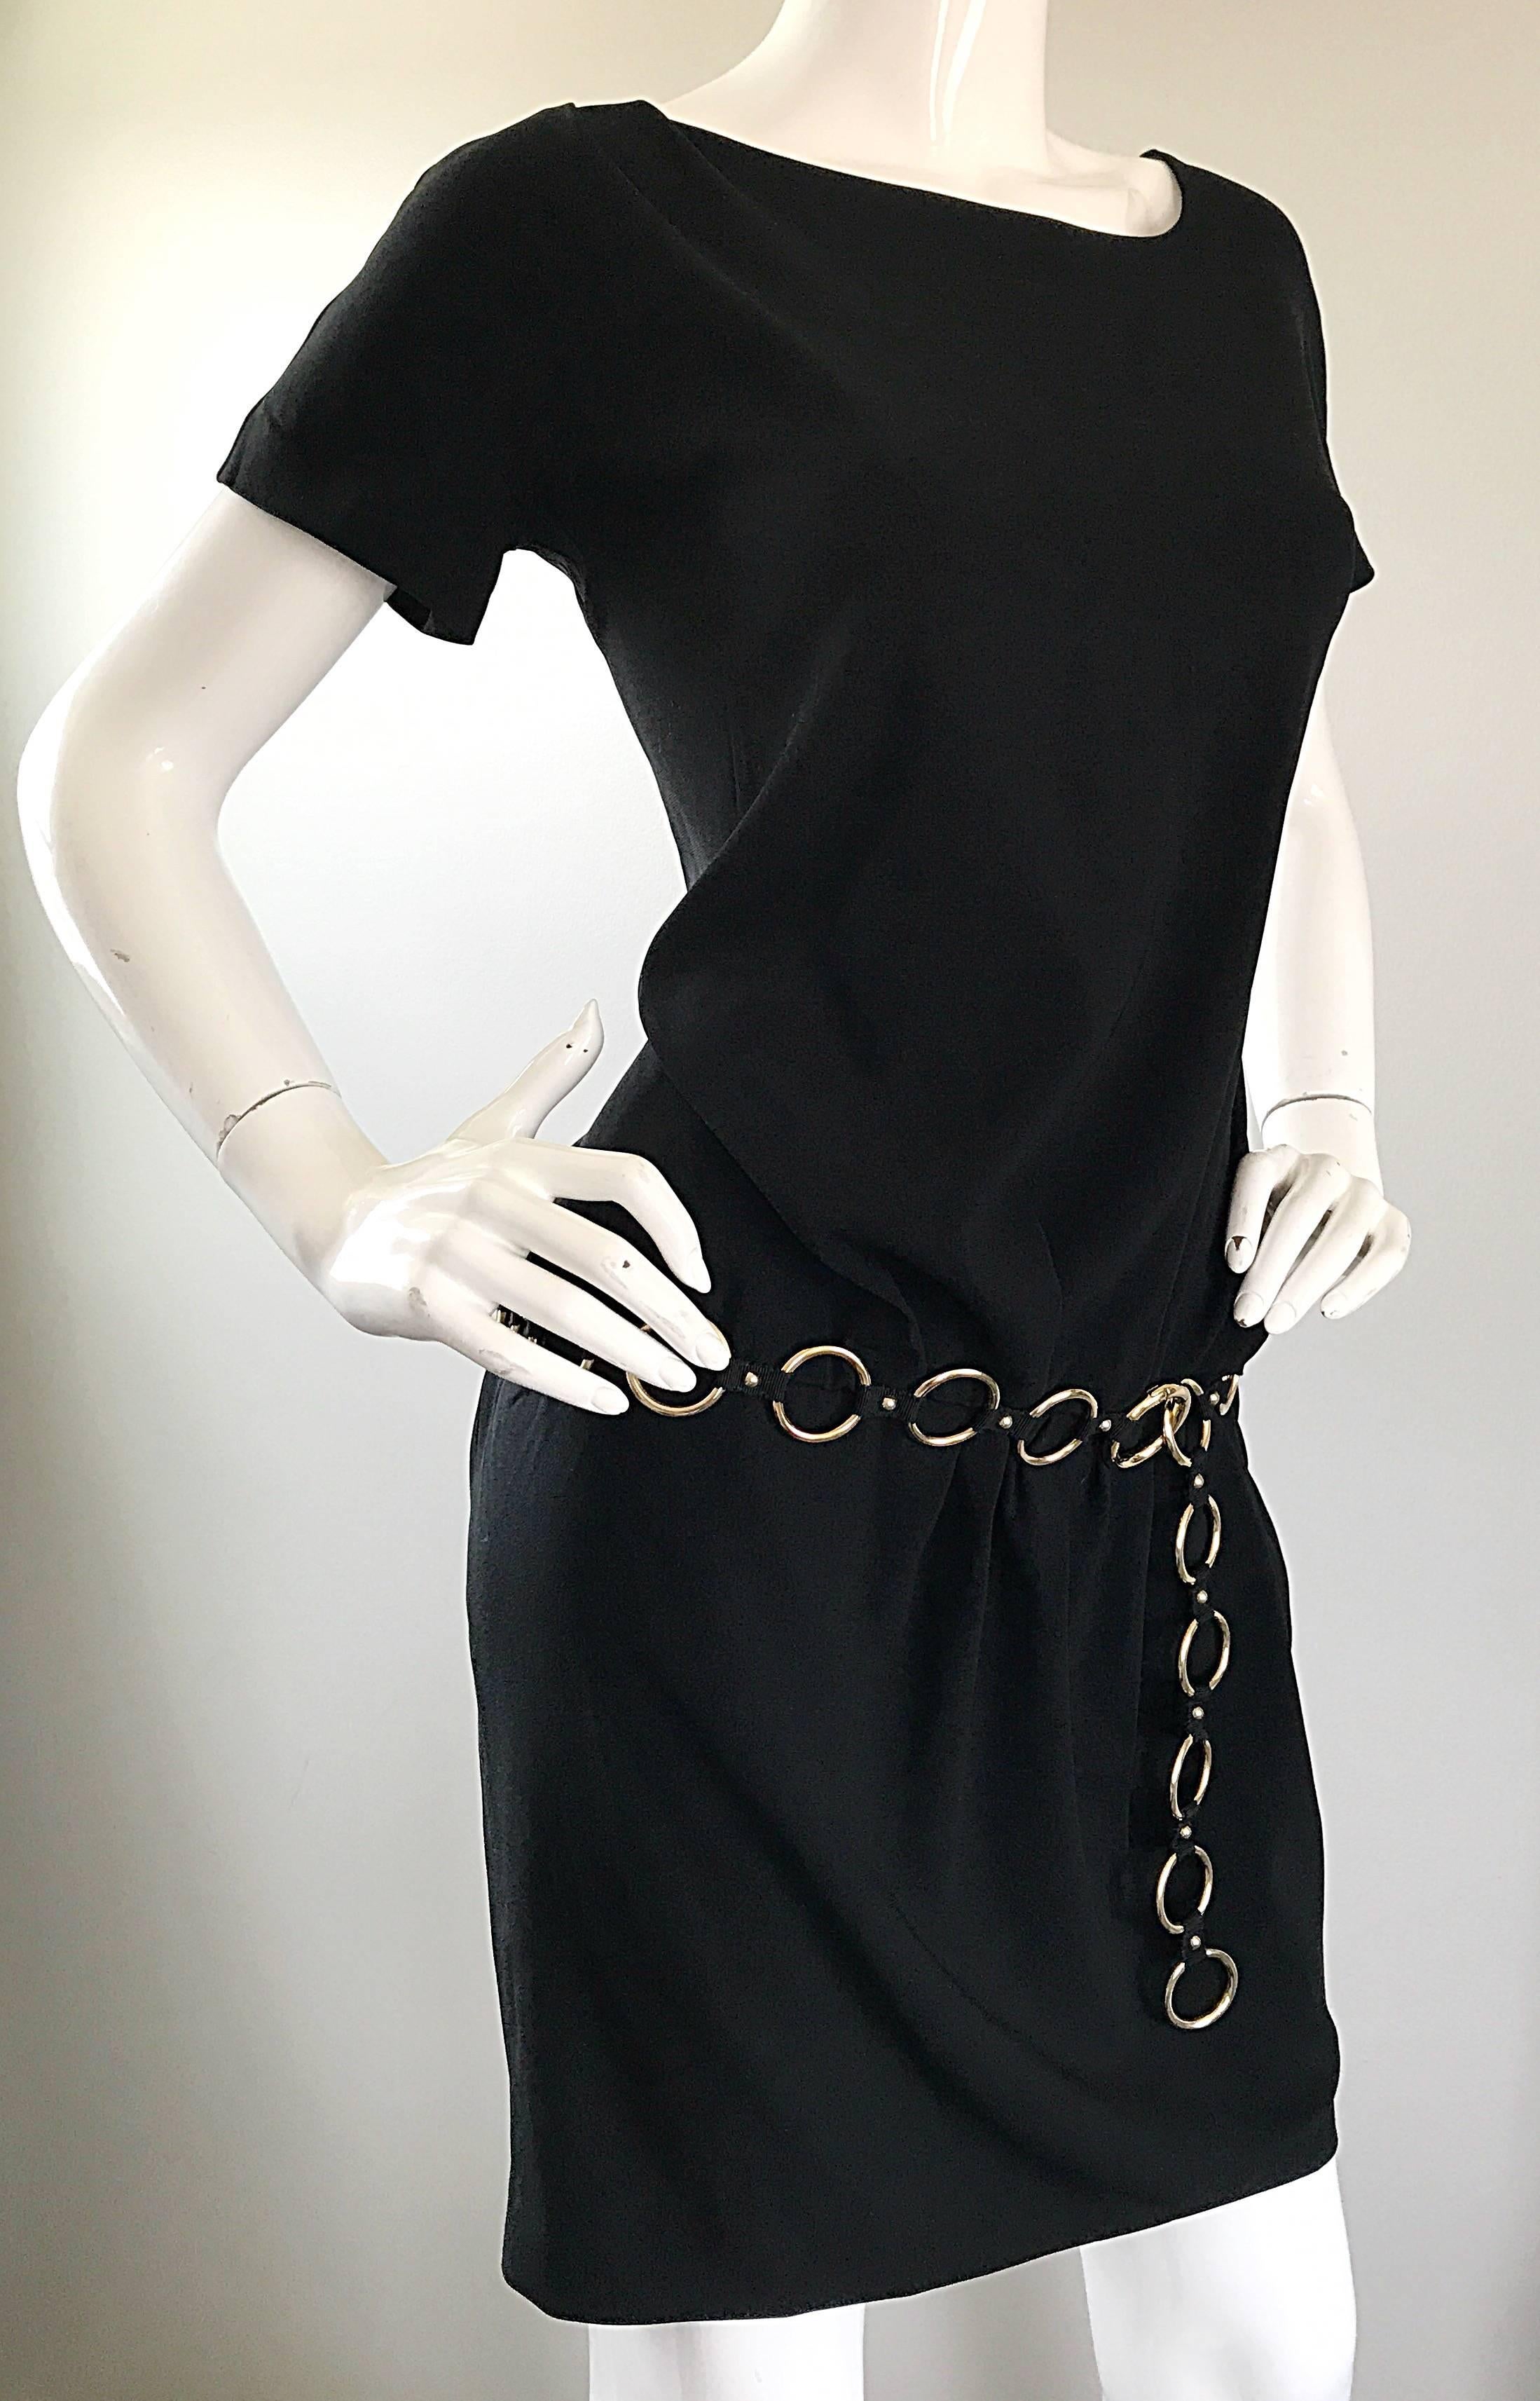 black dress with silver belt